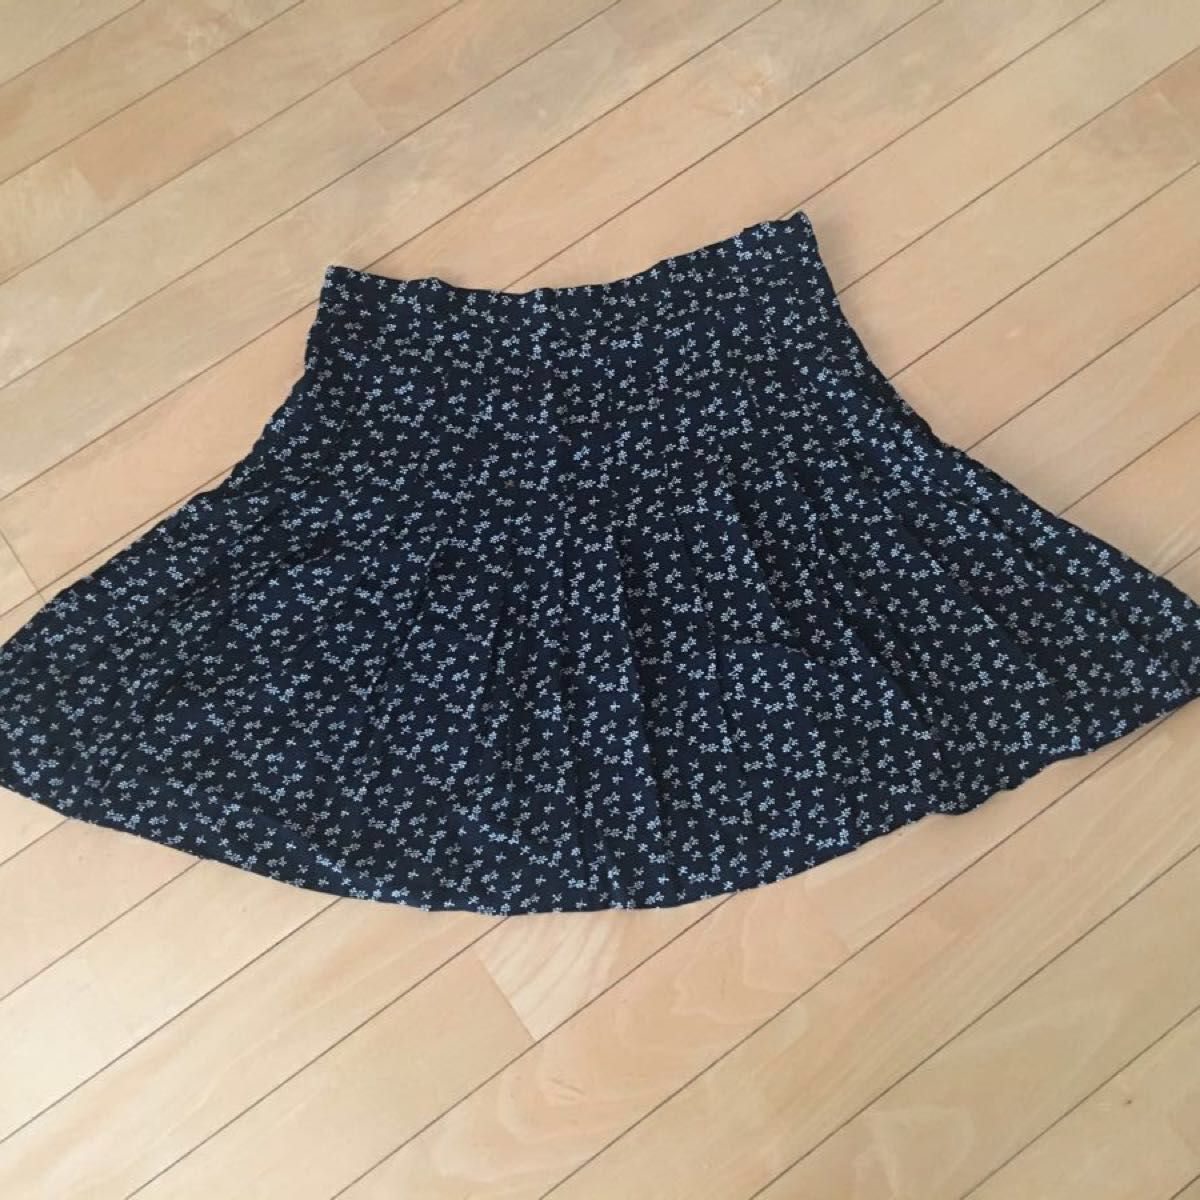 Ann Taylor pleated skirt プリーツスカート